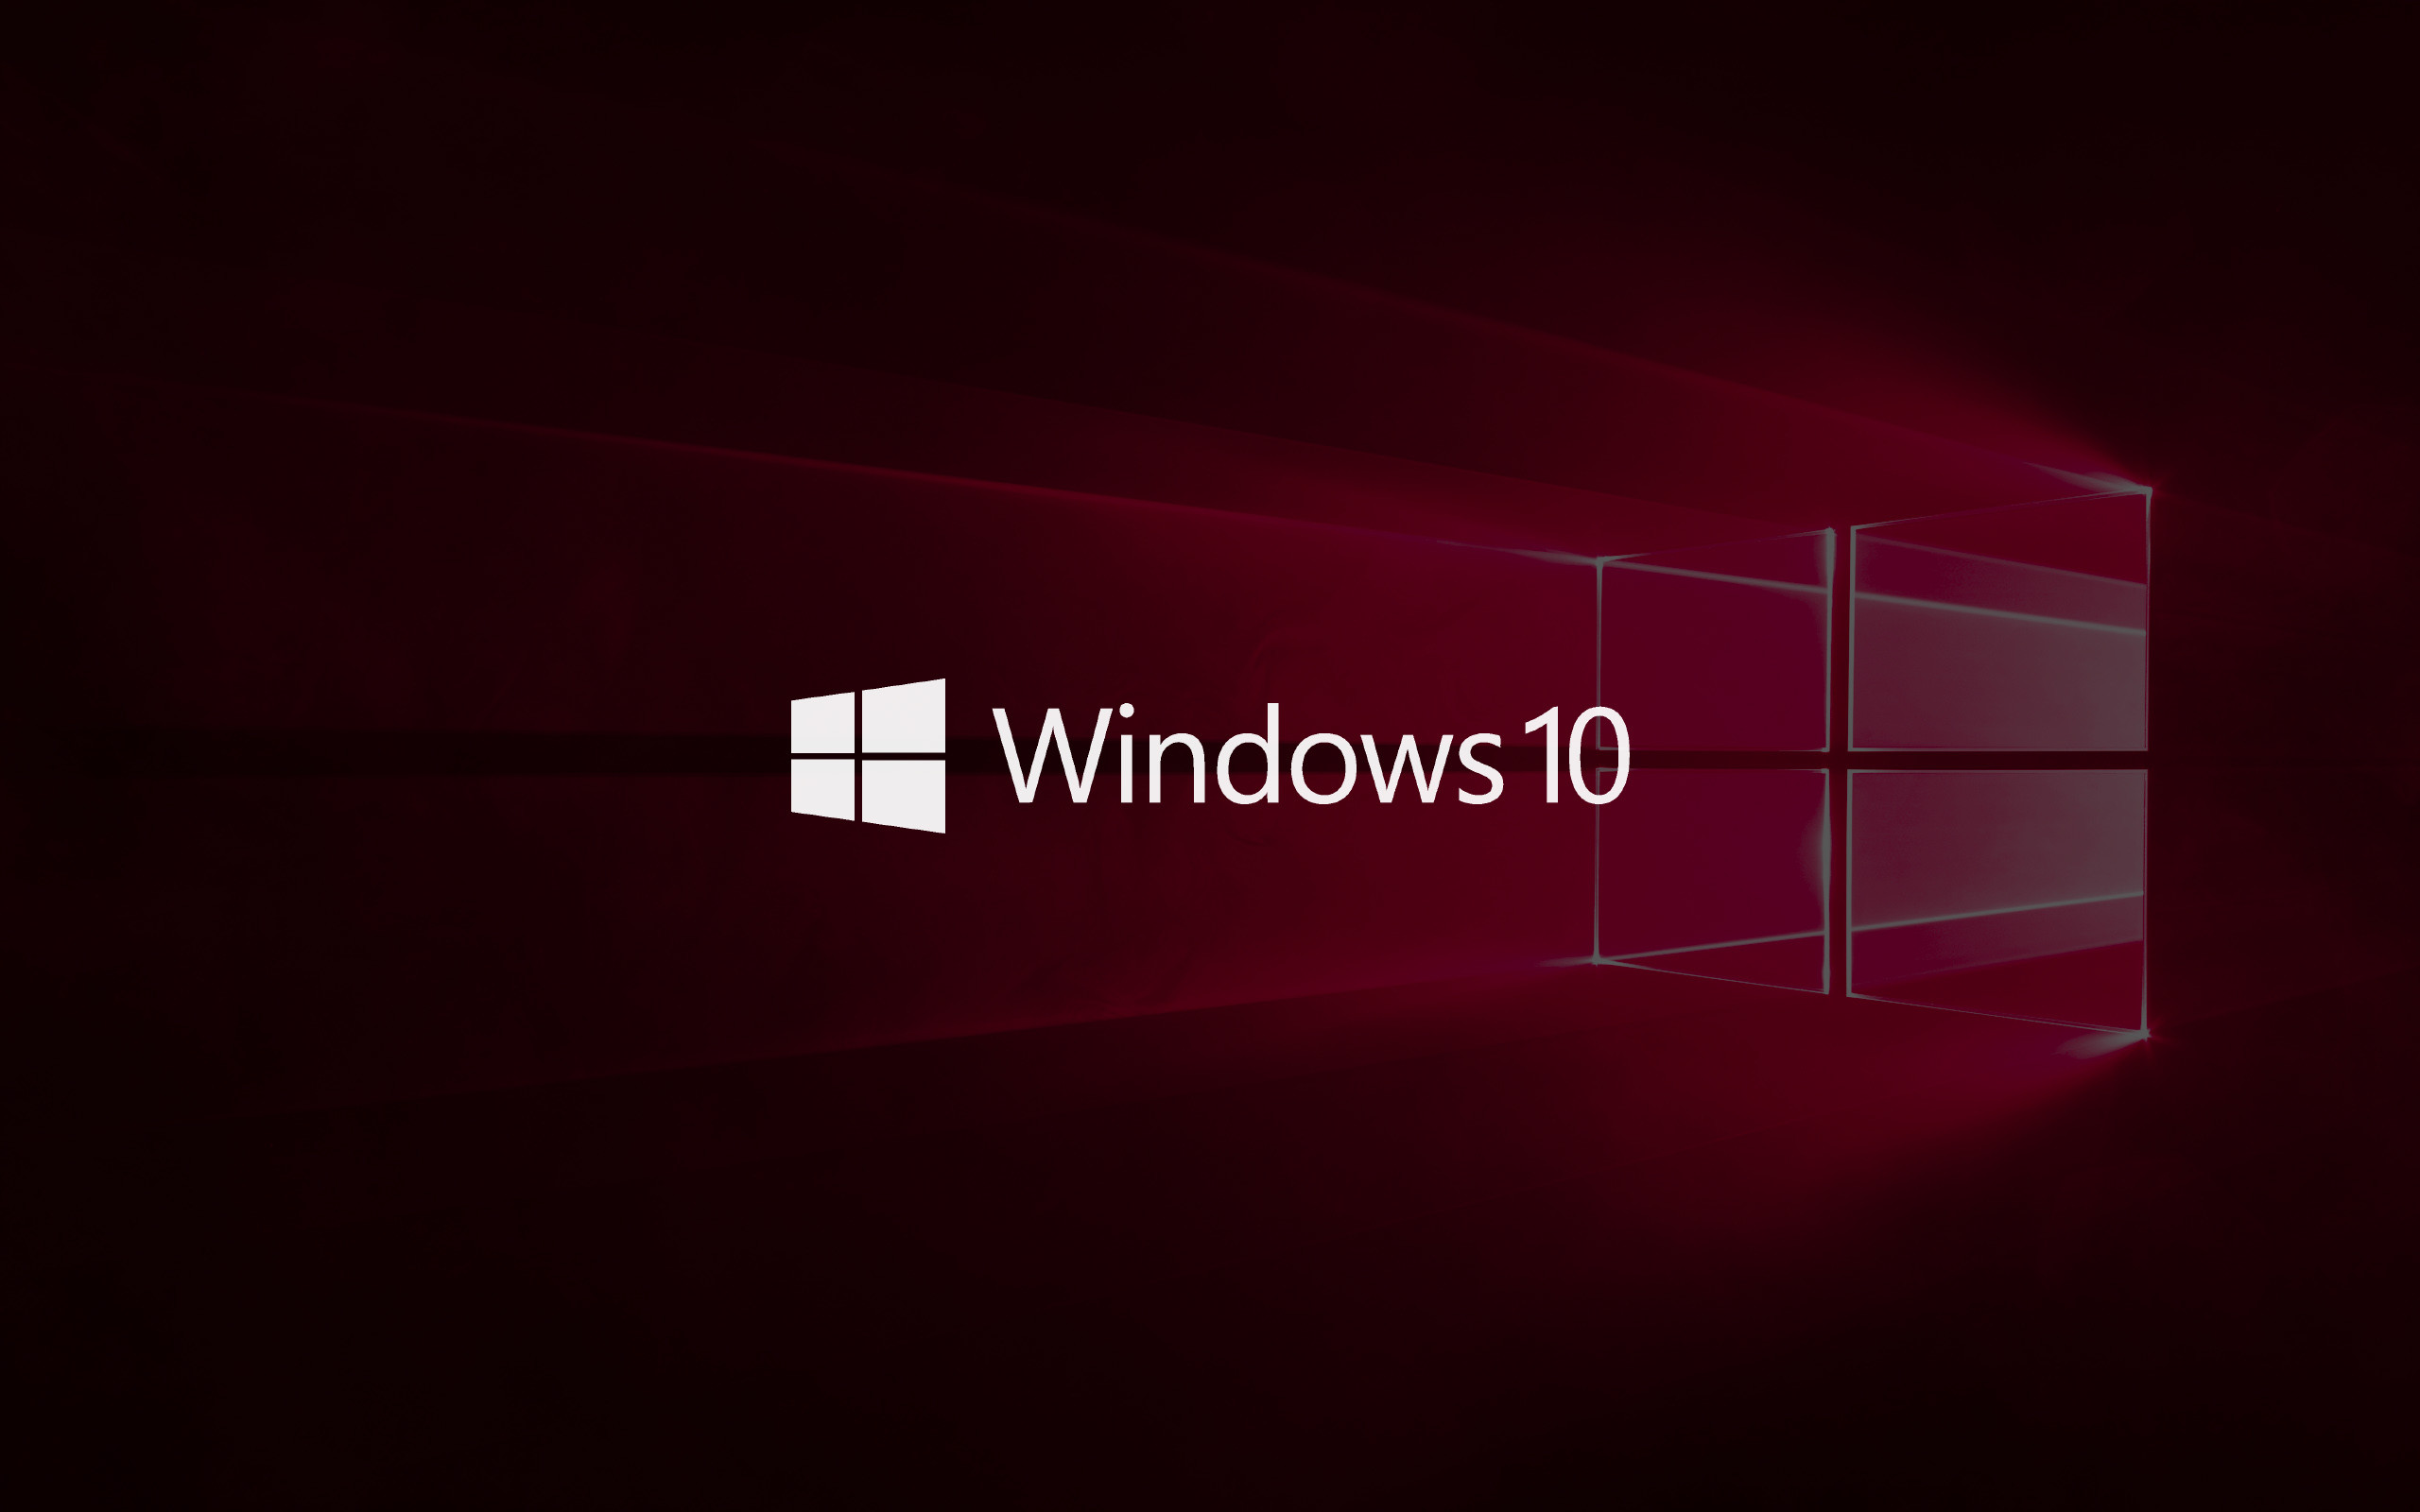 Rotating Wallpaper Windows 10 - Windows 10 Redstone - HD Wallpaper 